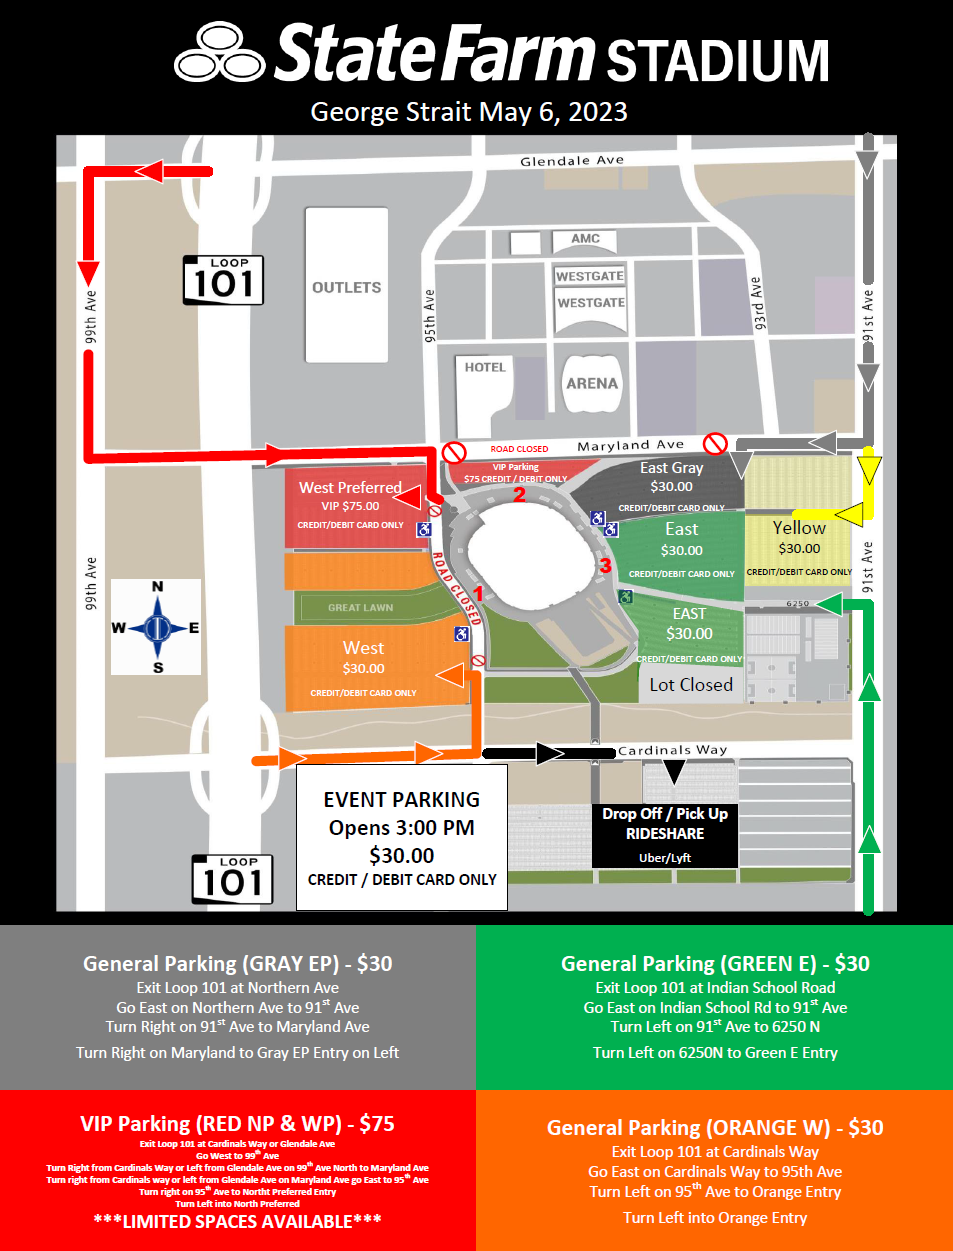 George Strait parking map for State Farm Stadium